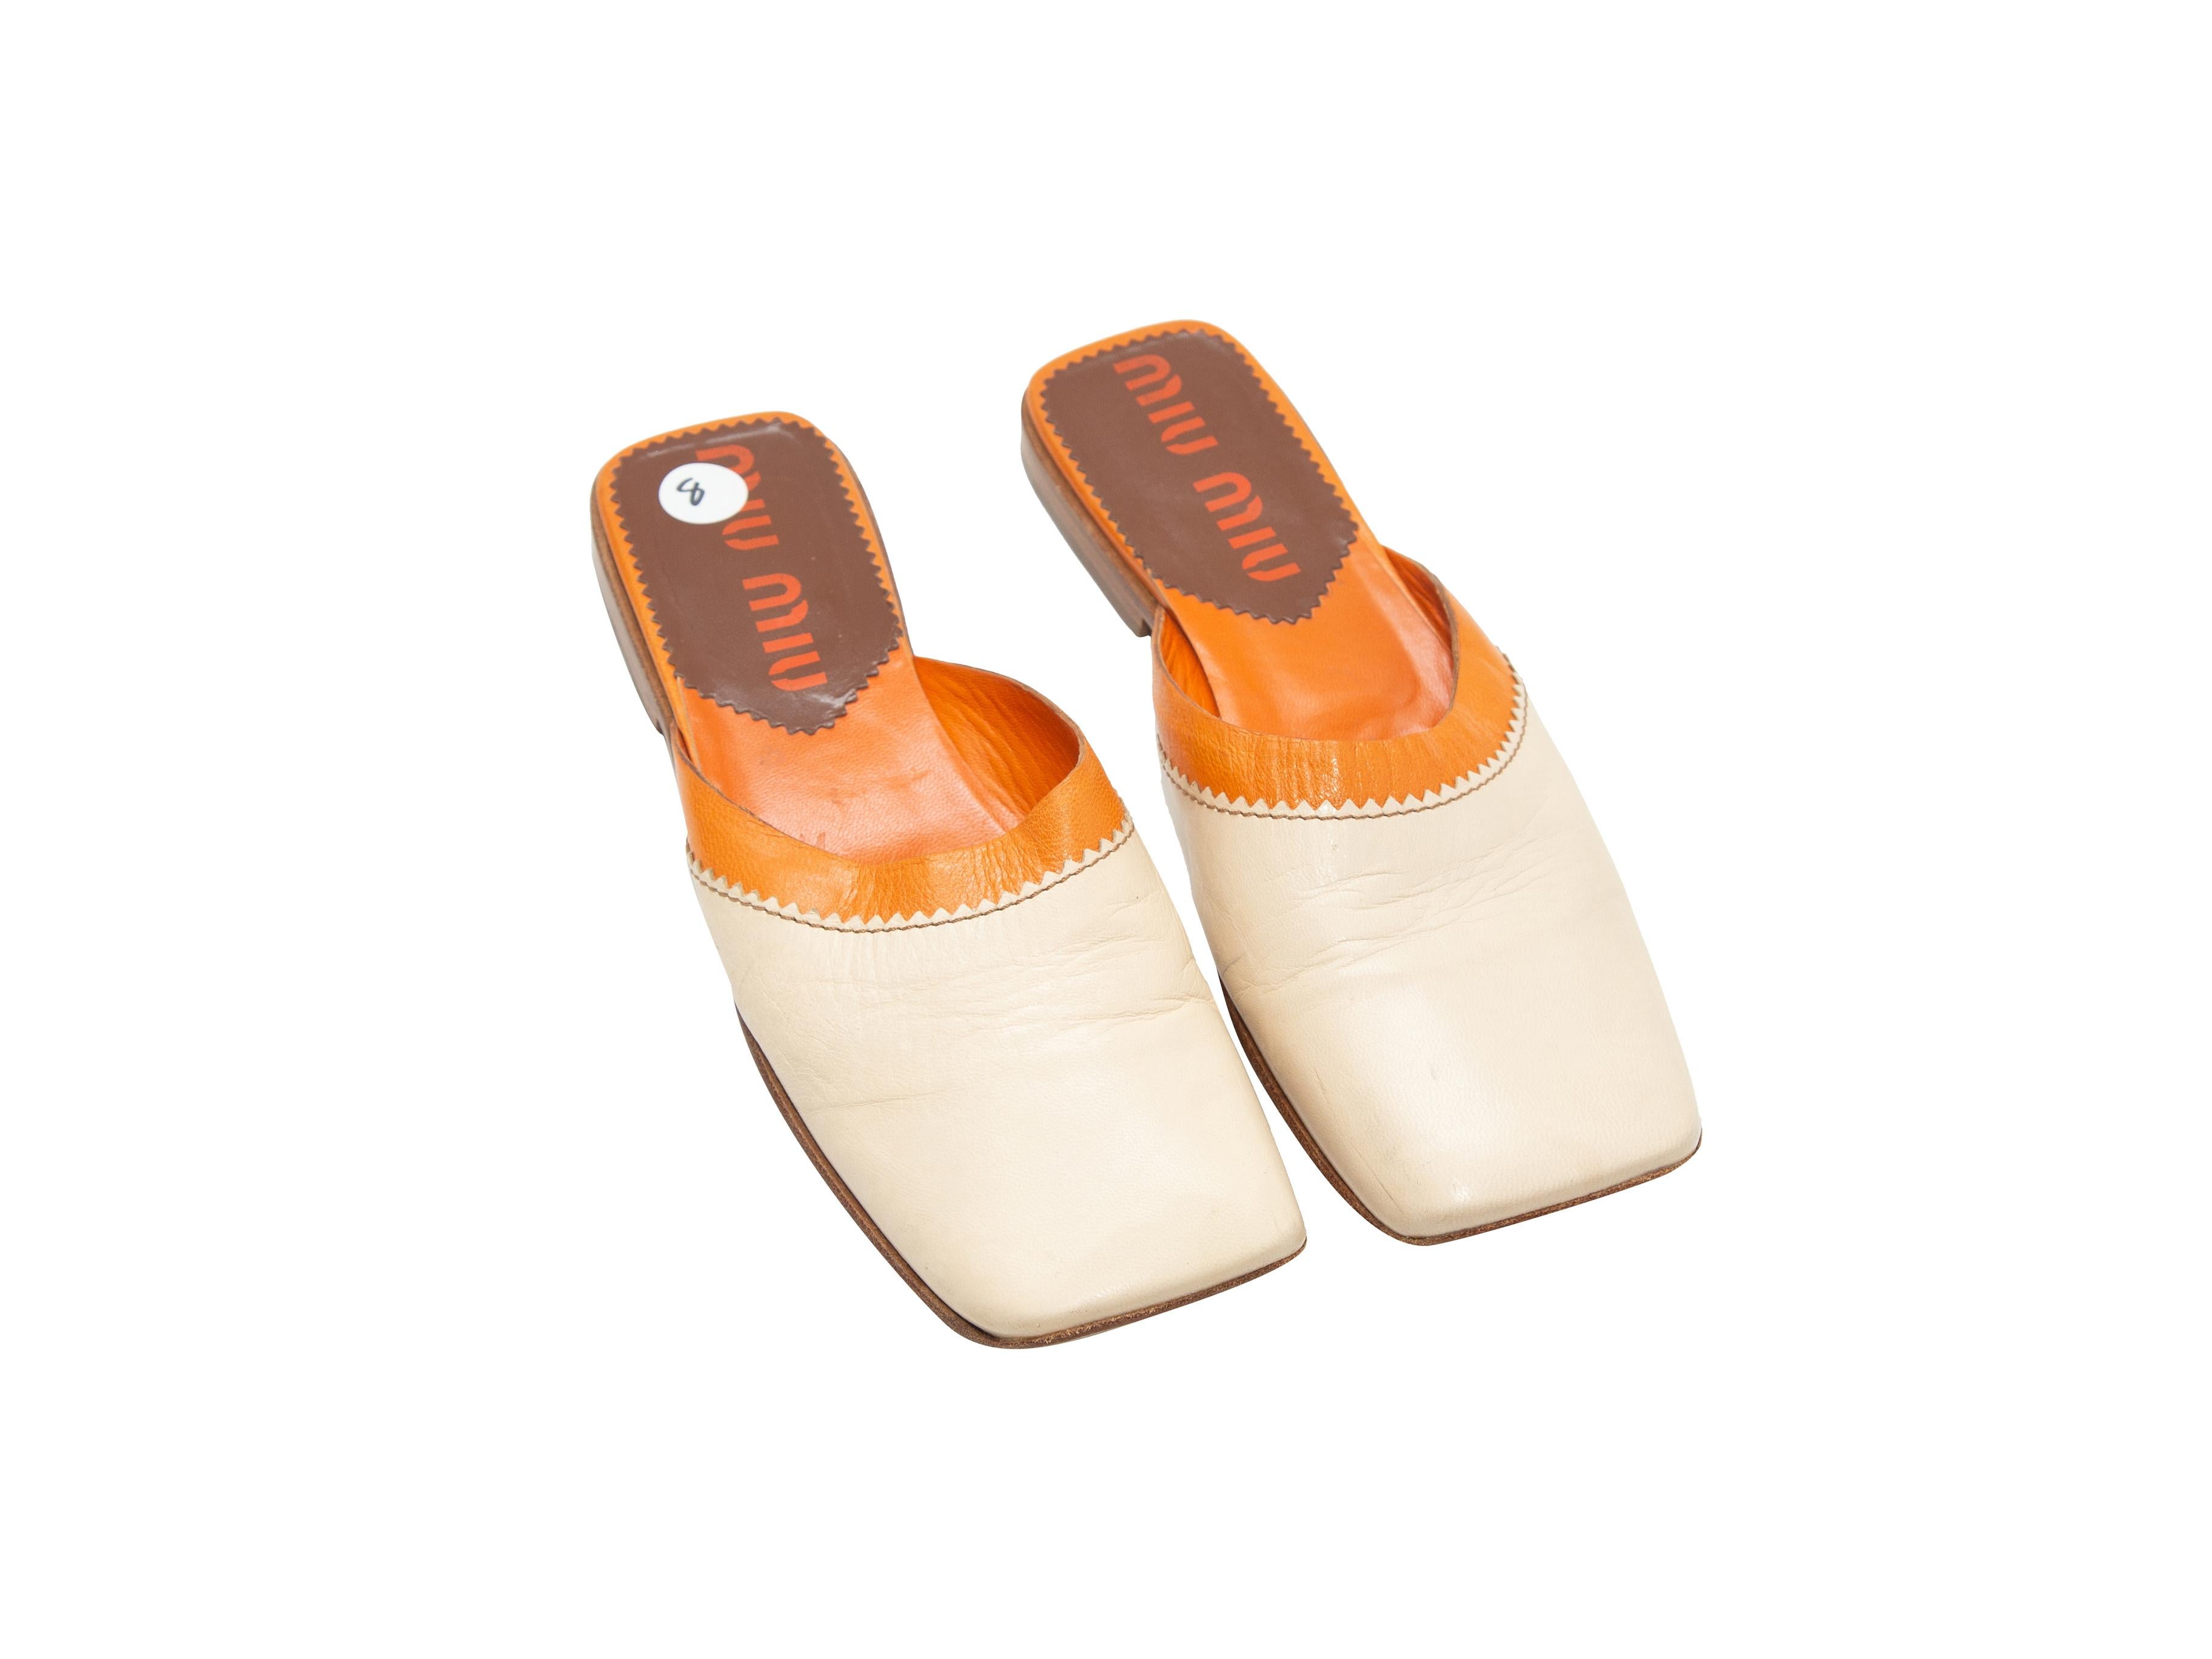 Product details: Vintage beige and orange leather square-toe mules by Miu Miu. Designer size 38. 0.5